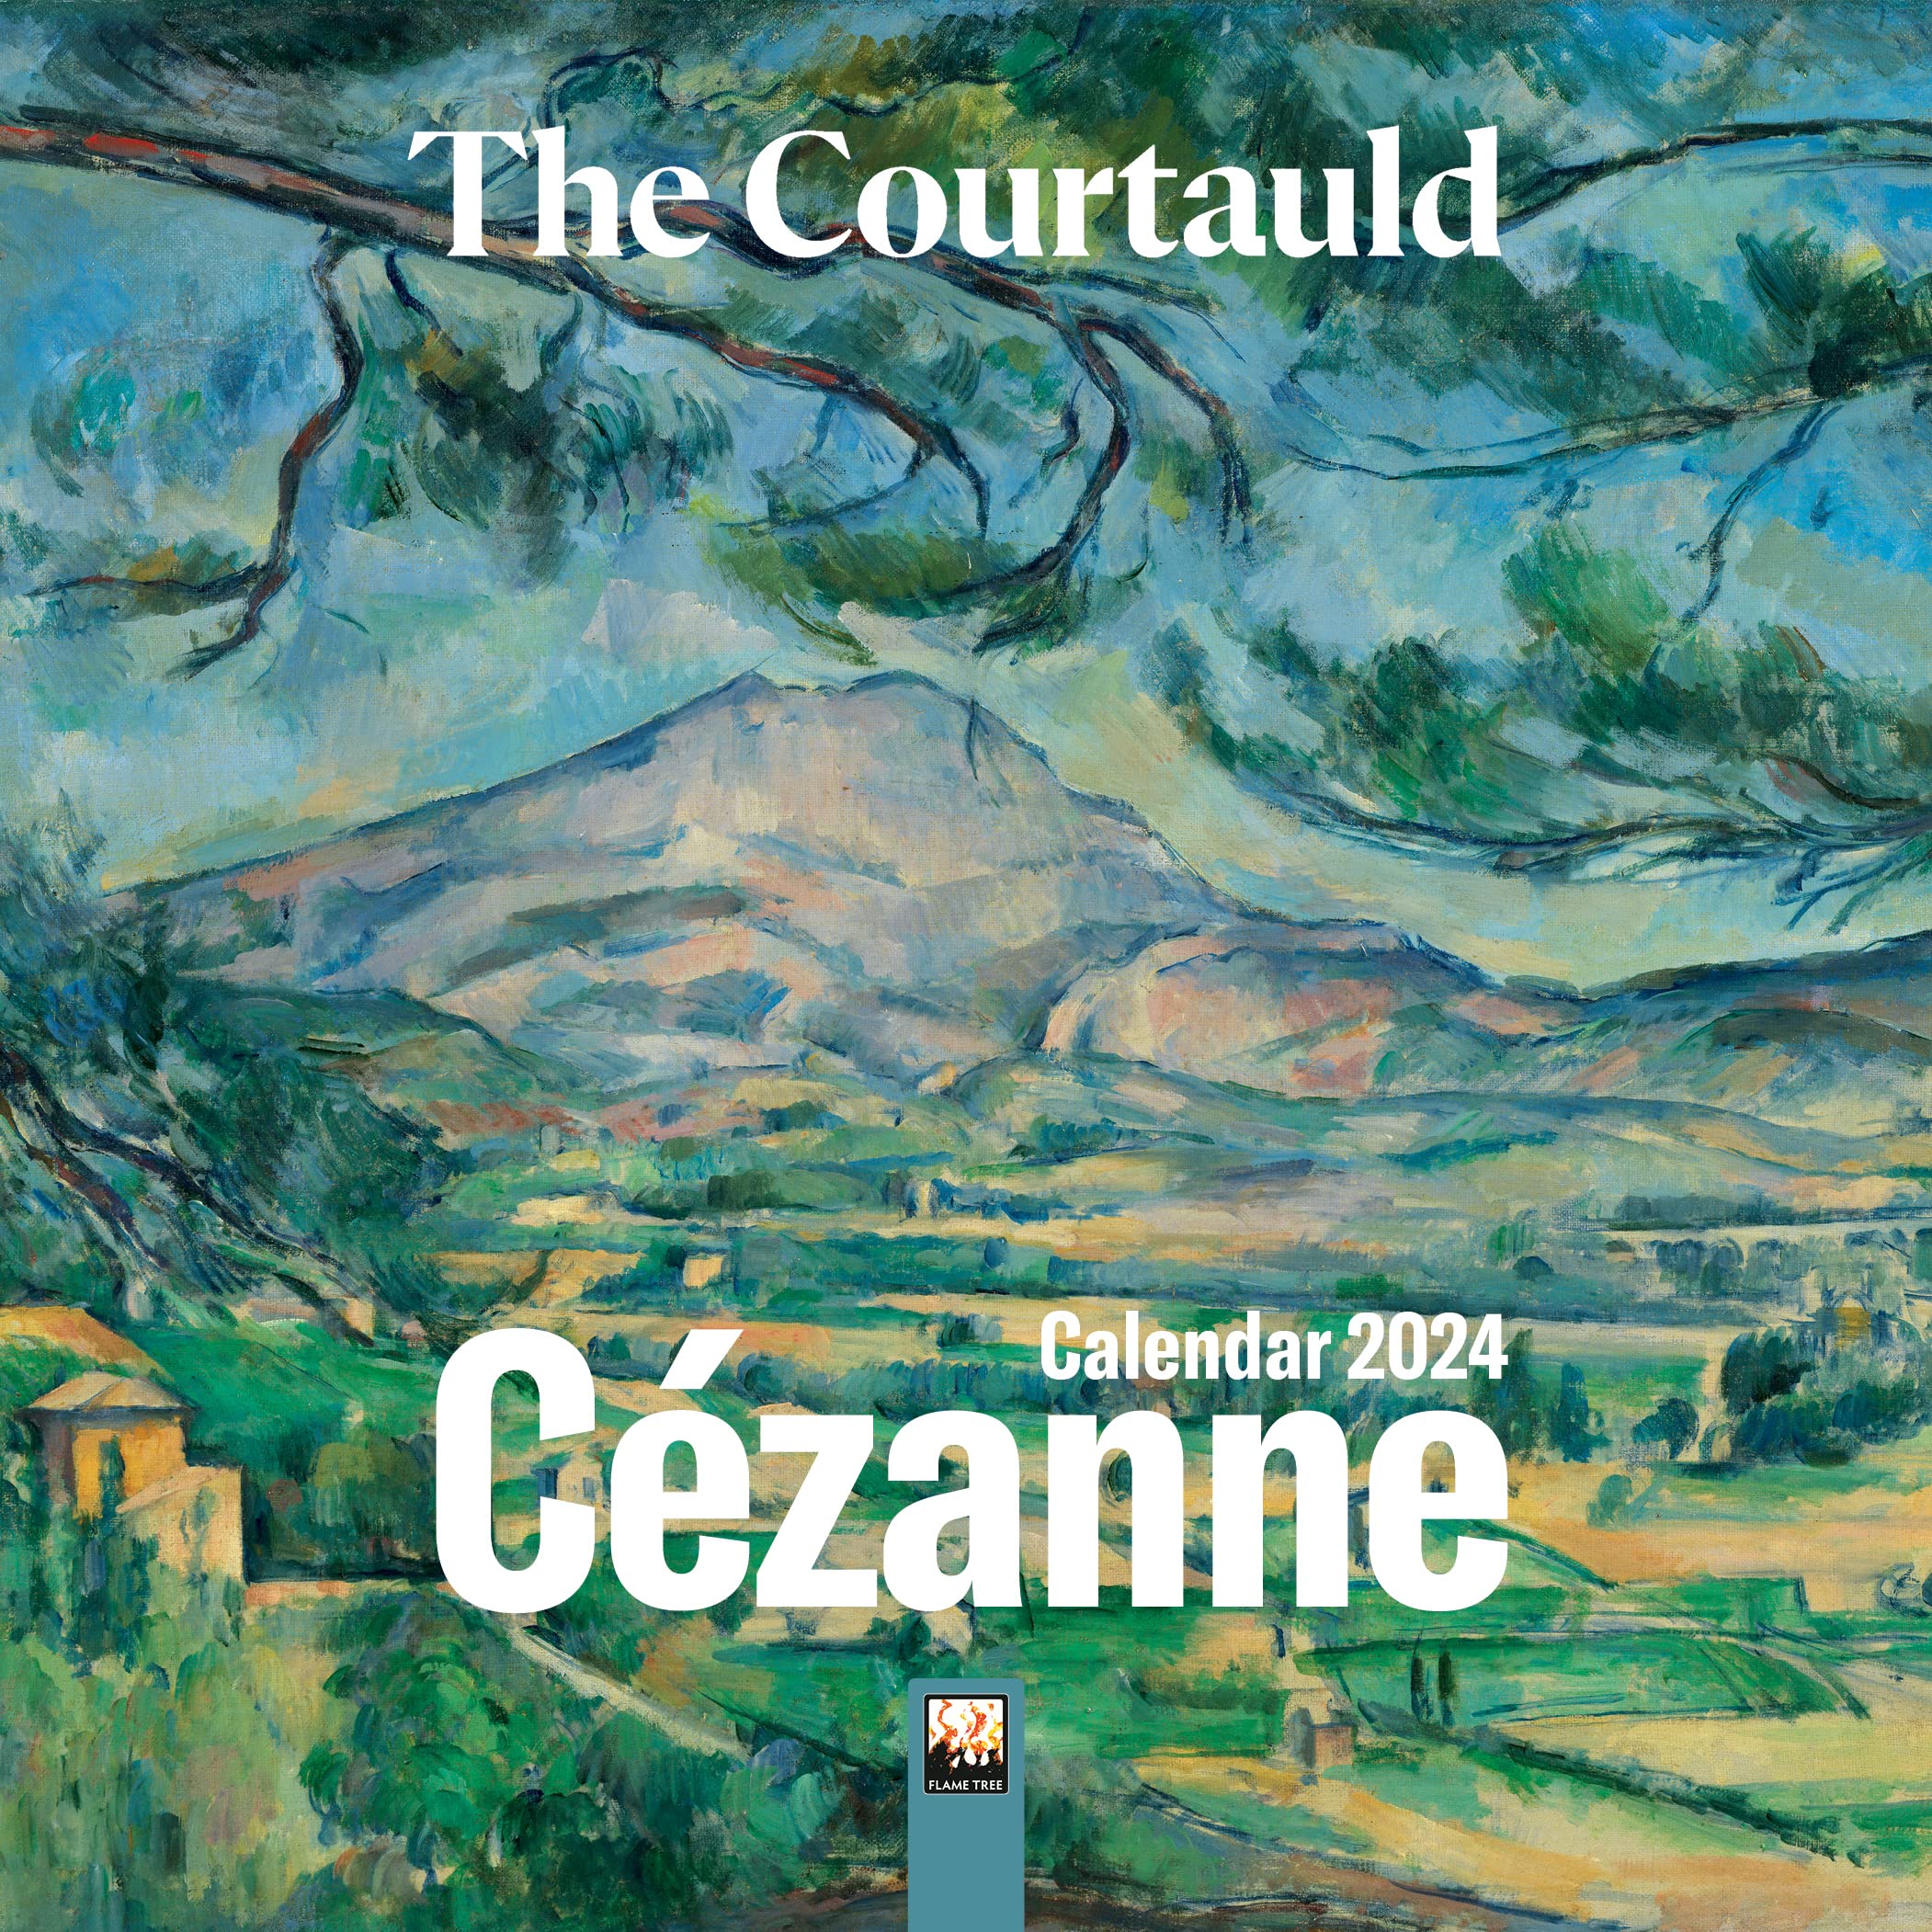 Calendar 2024 - The Courtauld | Flame Tree Studio